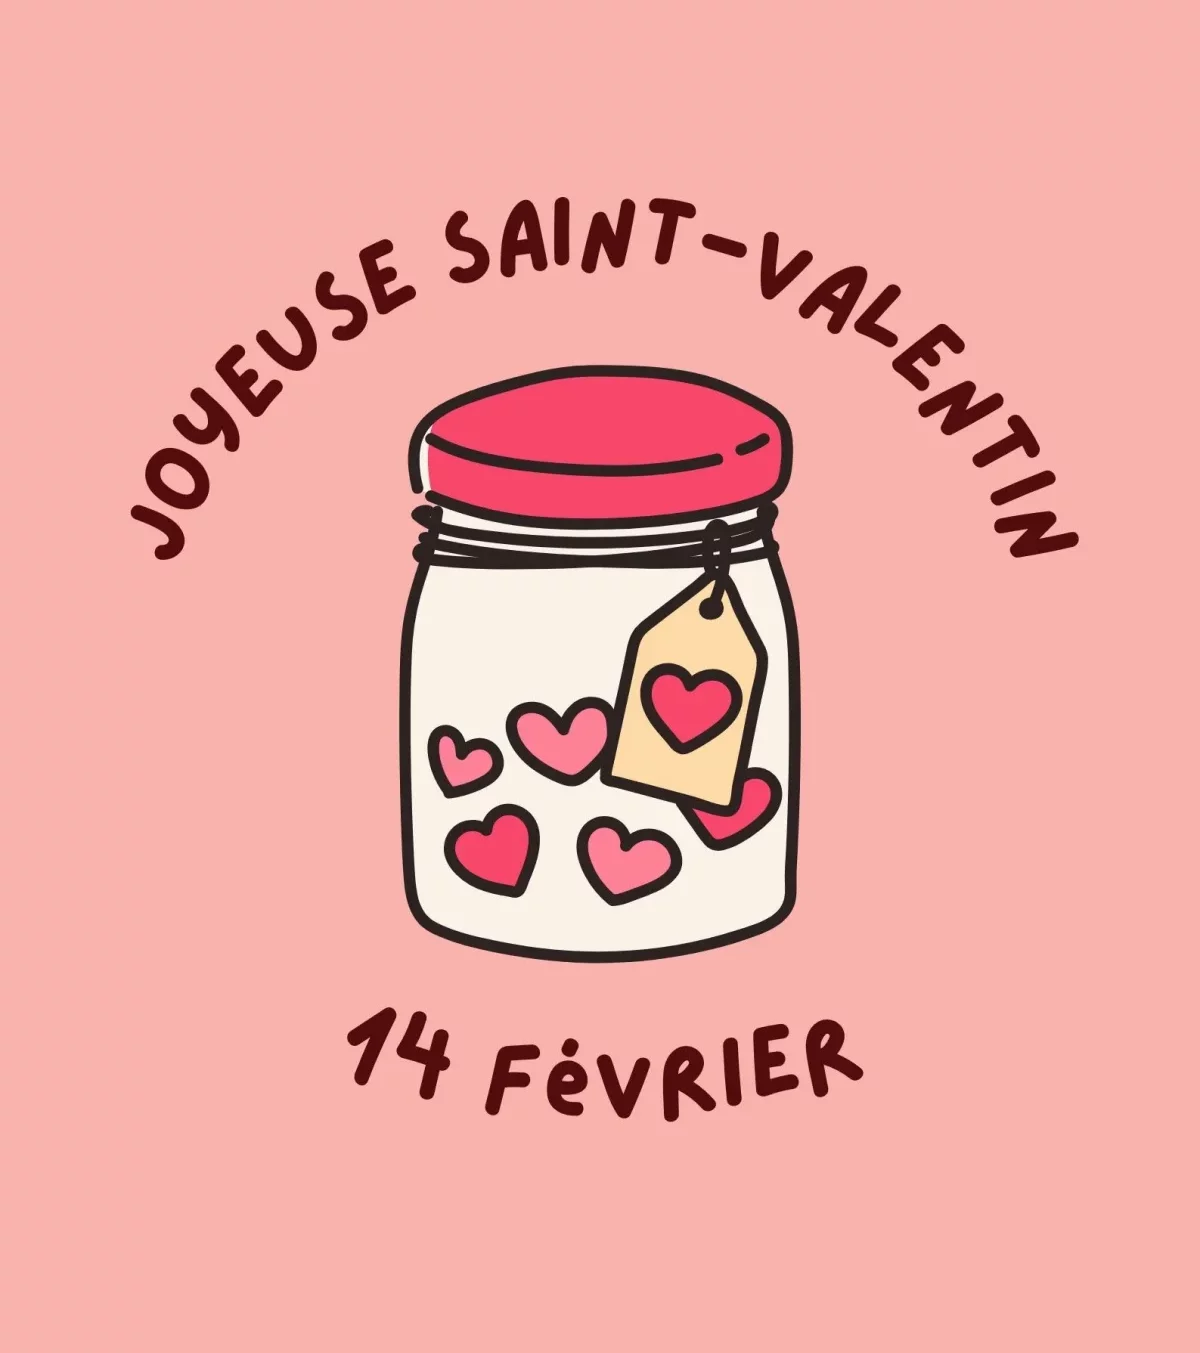 fond d écran saint valentin pot en verre rempli de coeurs 14 février